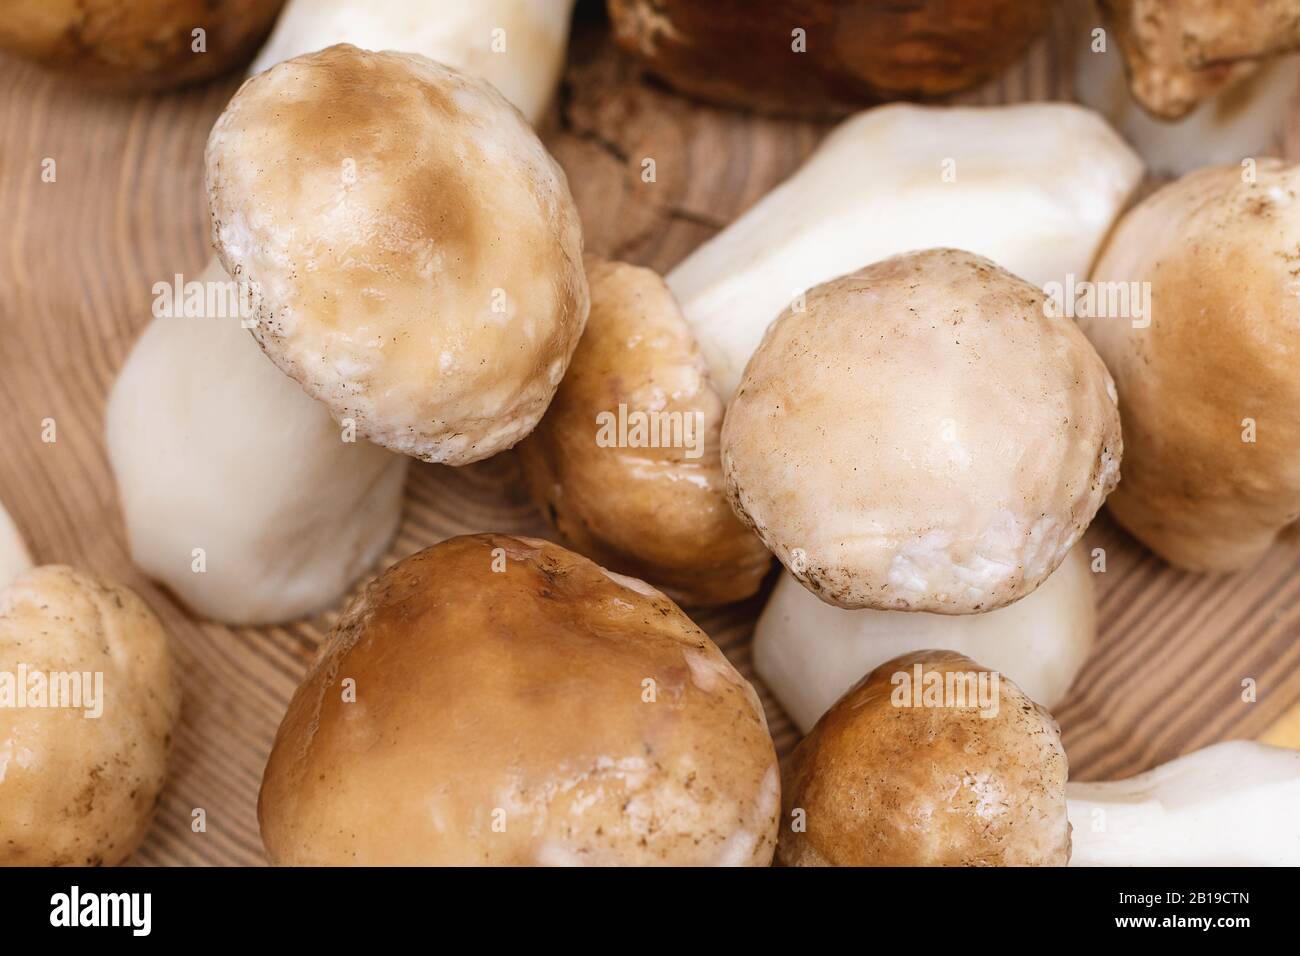 Small Boletus mushroom on wooden background, close up Stock Photo